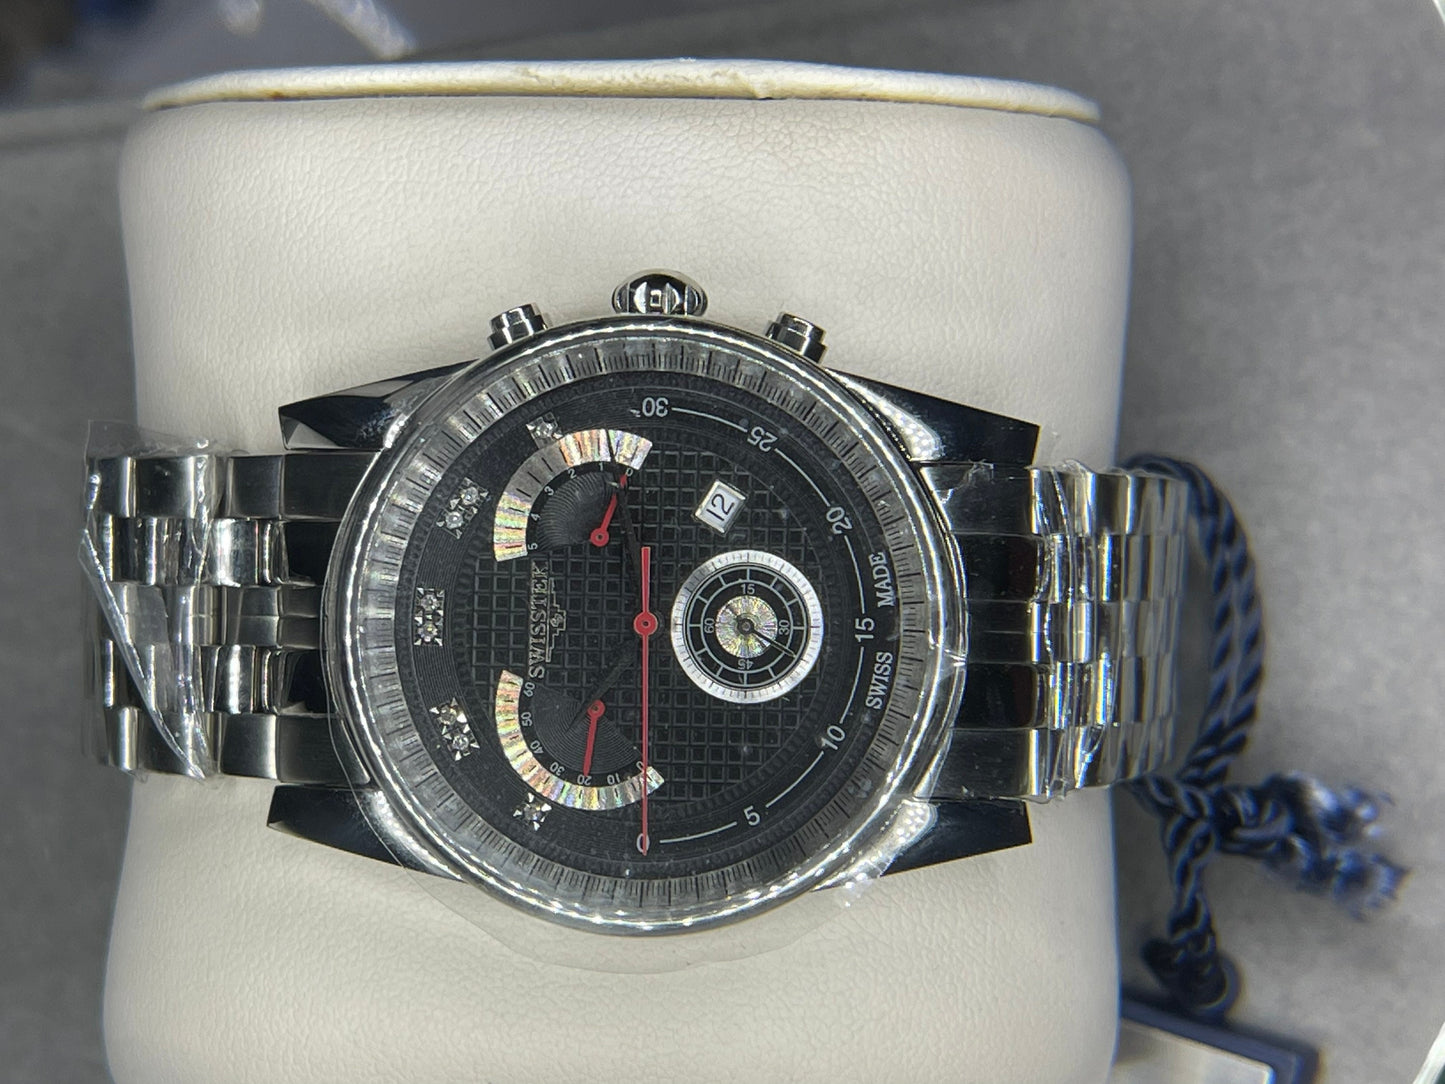 Mens Swisstek Diamond Automatic Watch